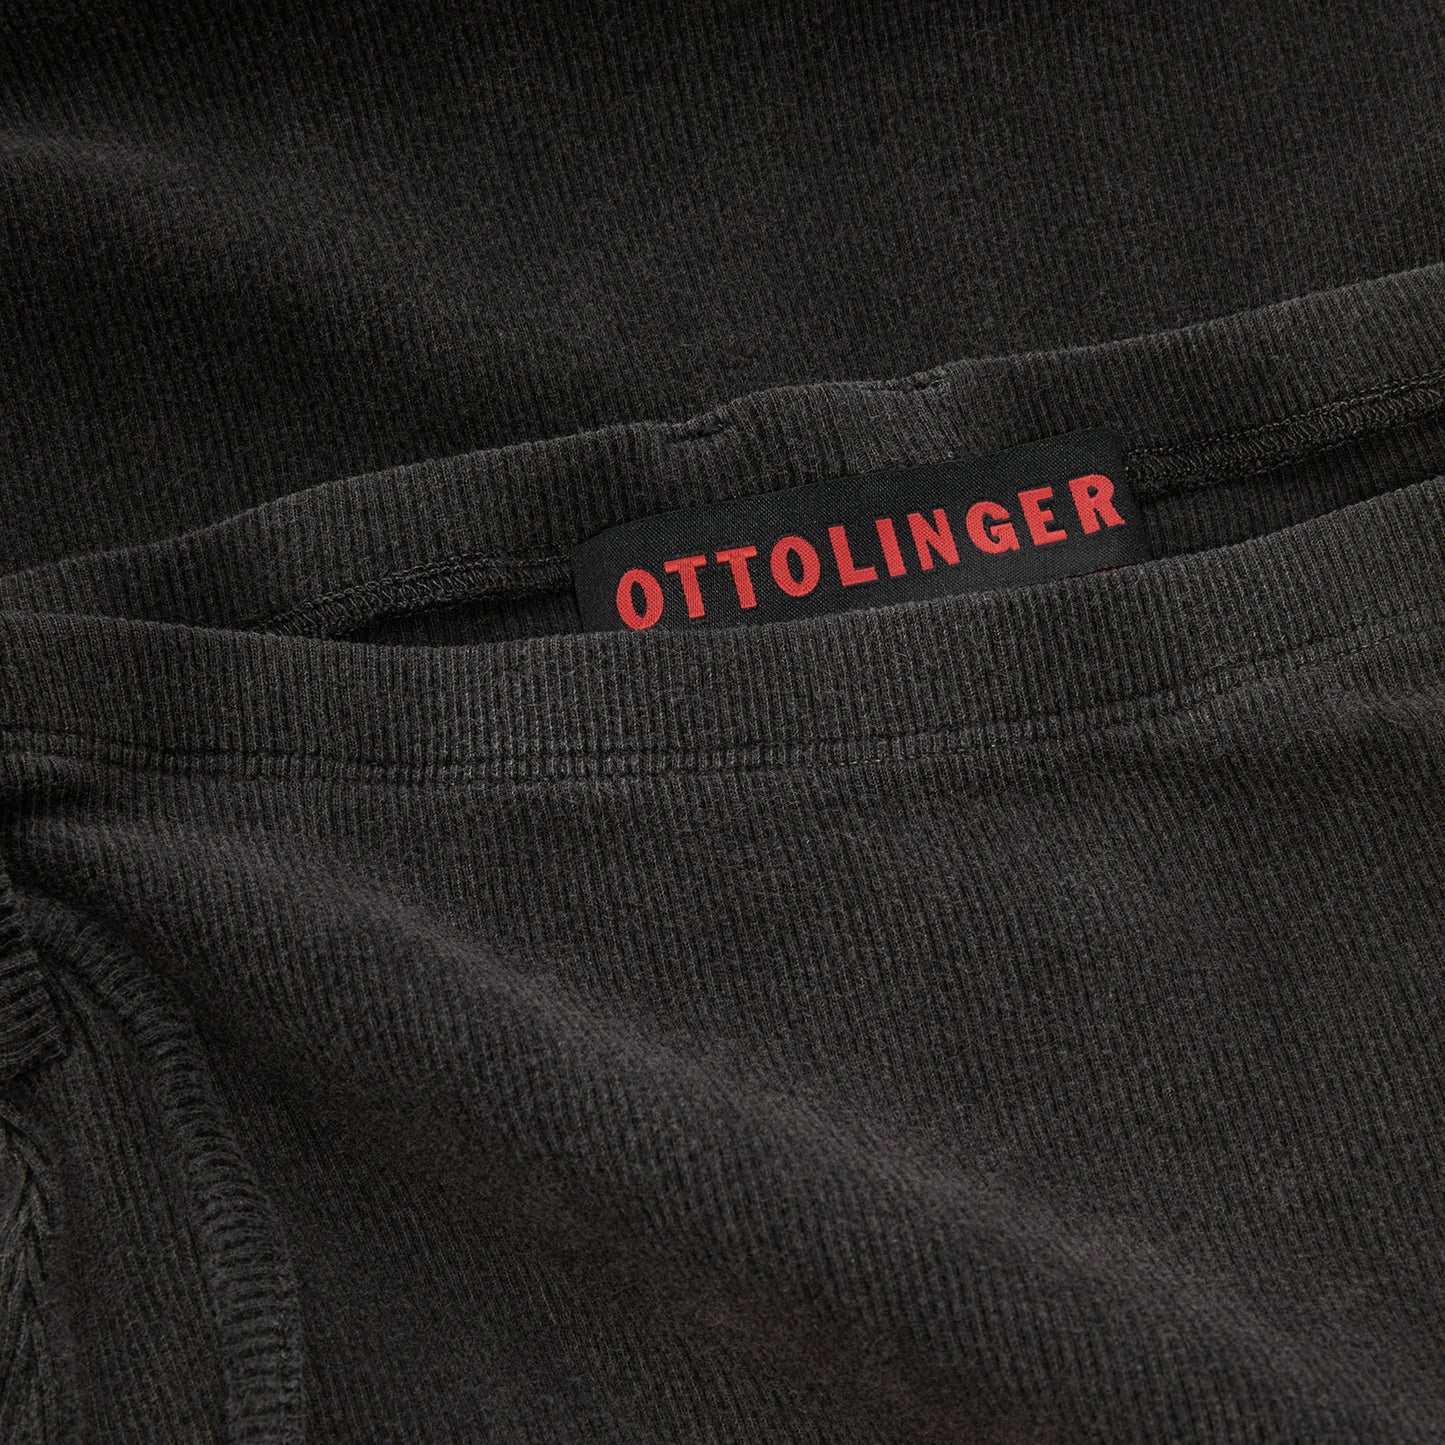 Ottolinger x Tomorrow Long Ribbed Skirt (Black Wash)